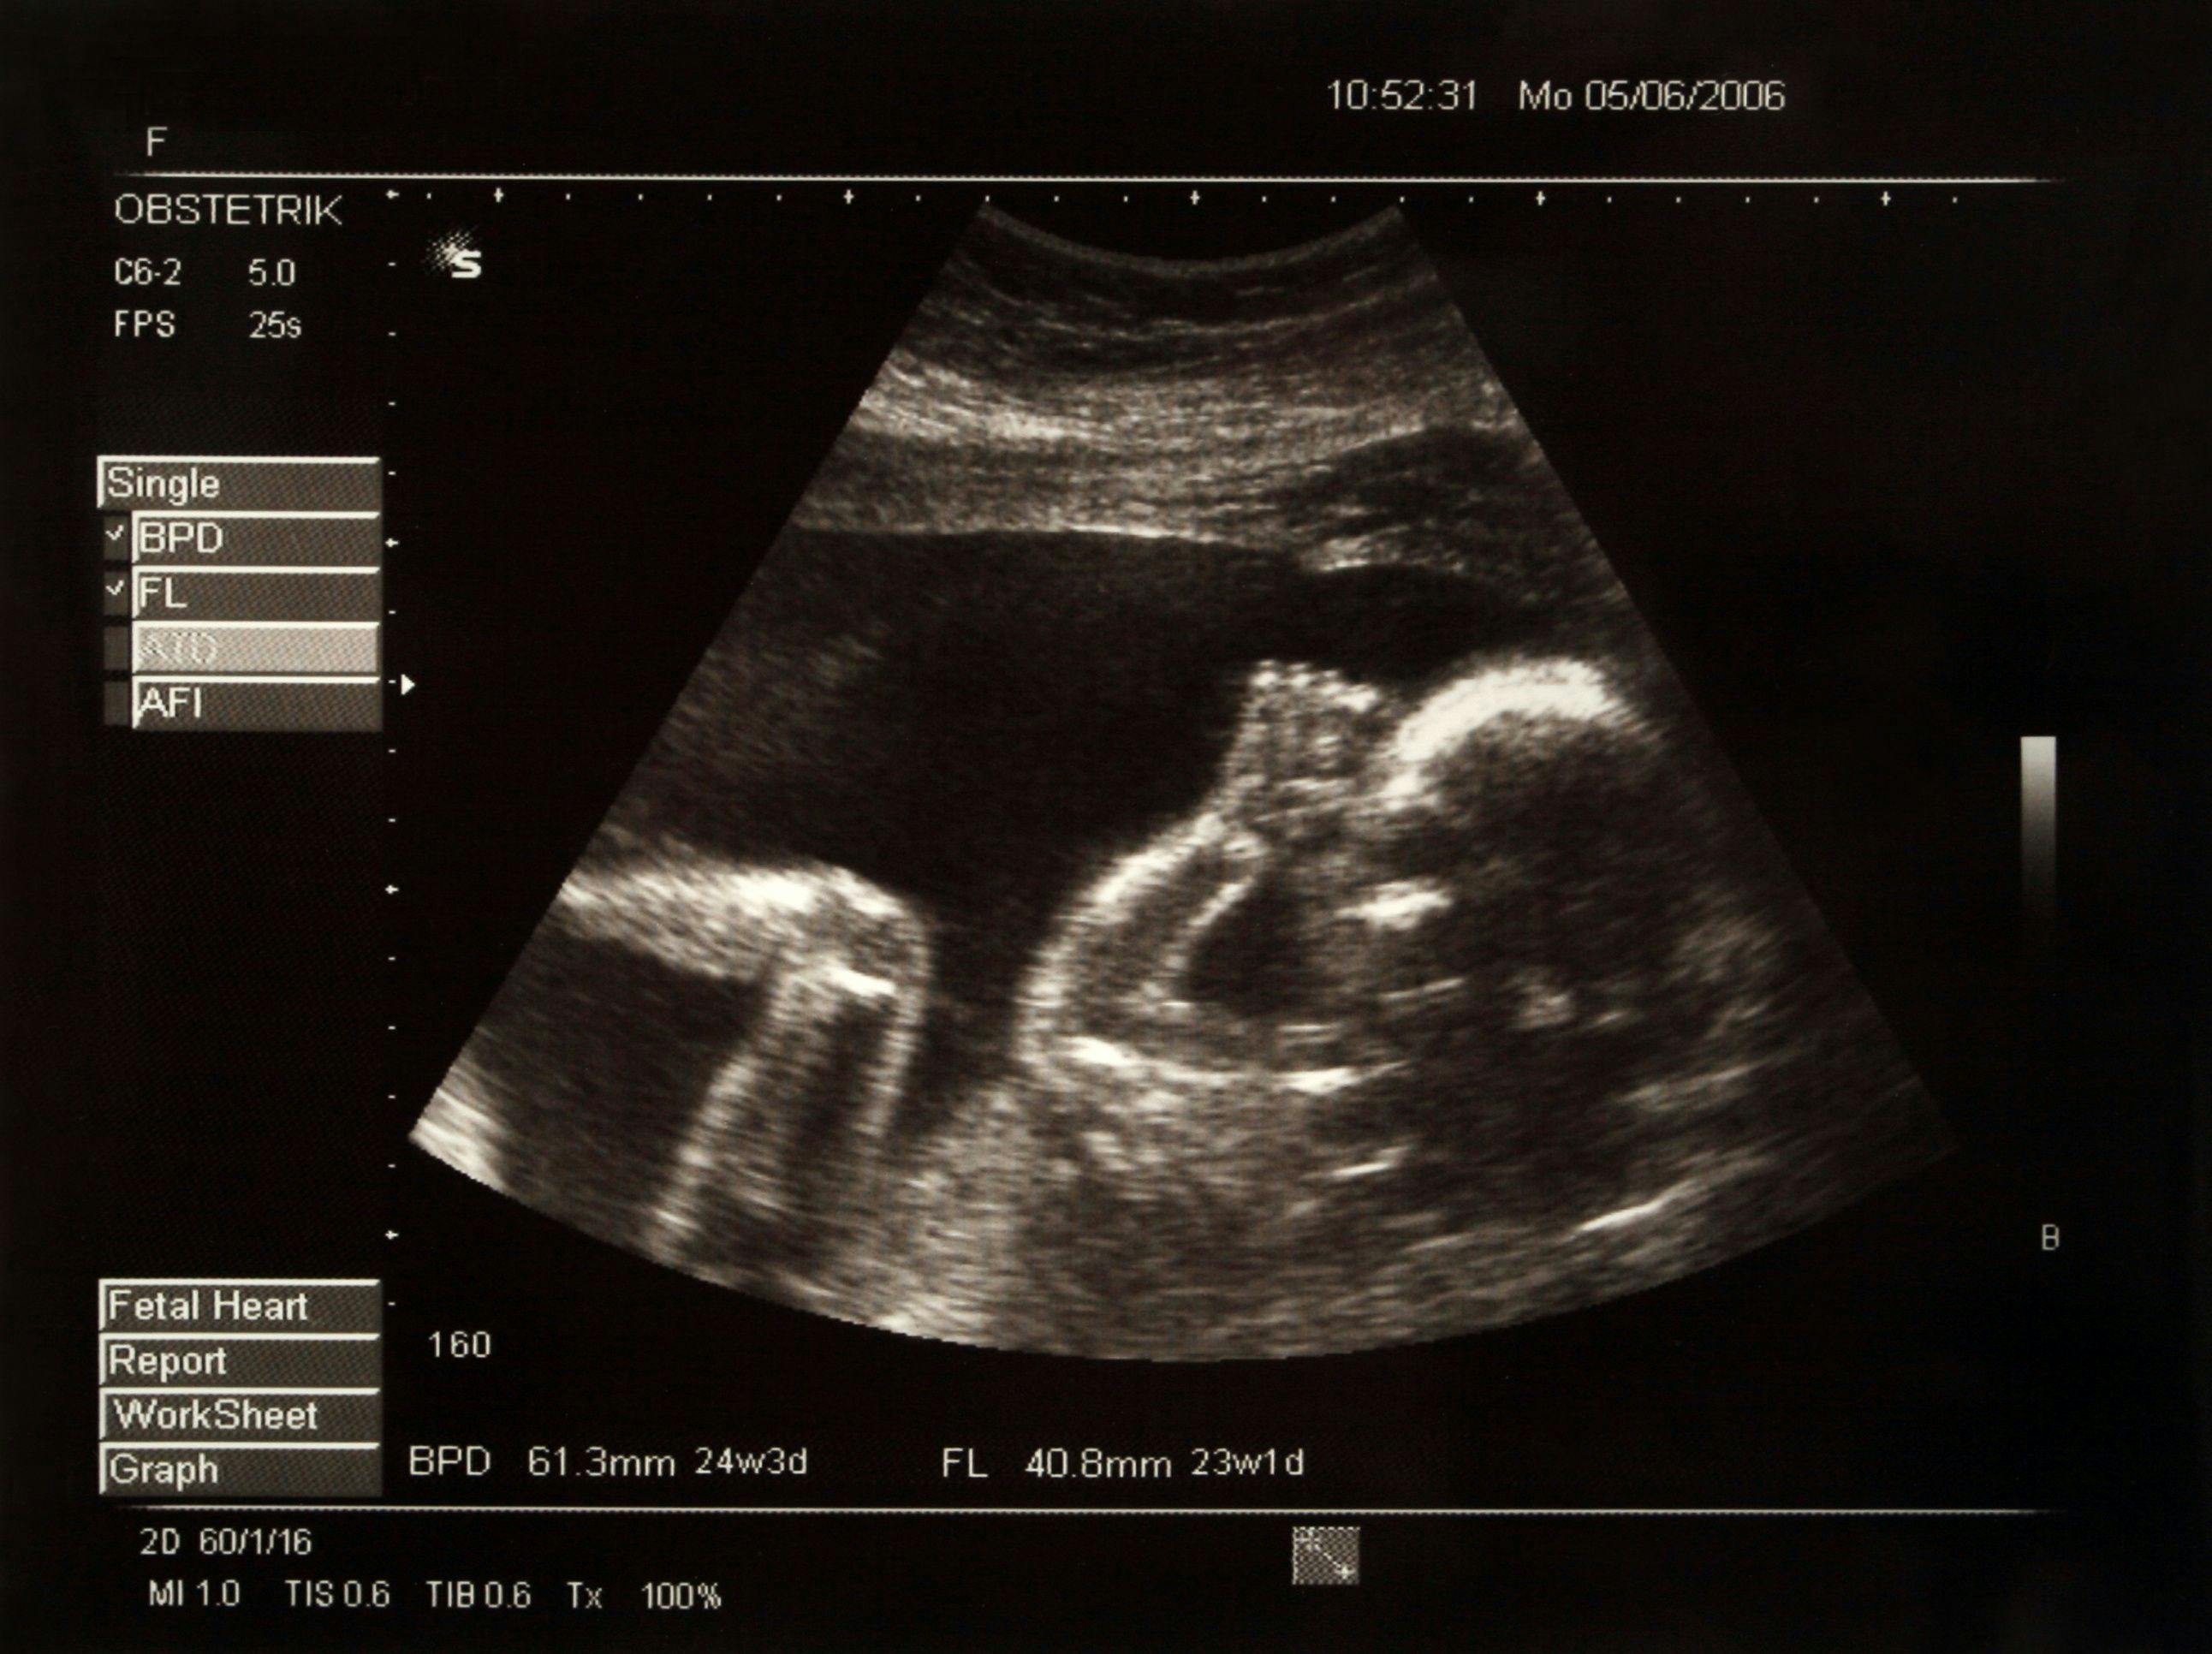 Ultrasound to predict placental pathology